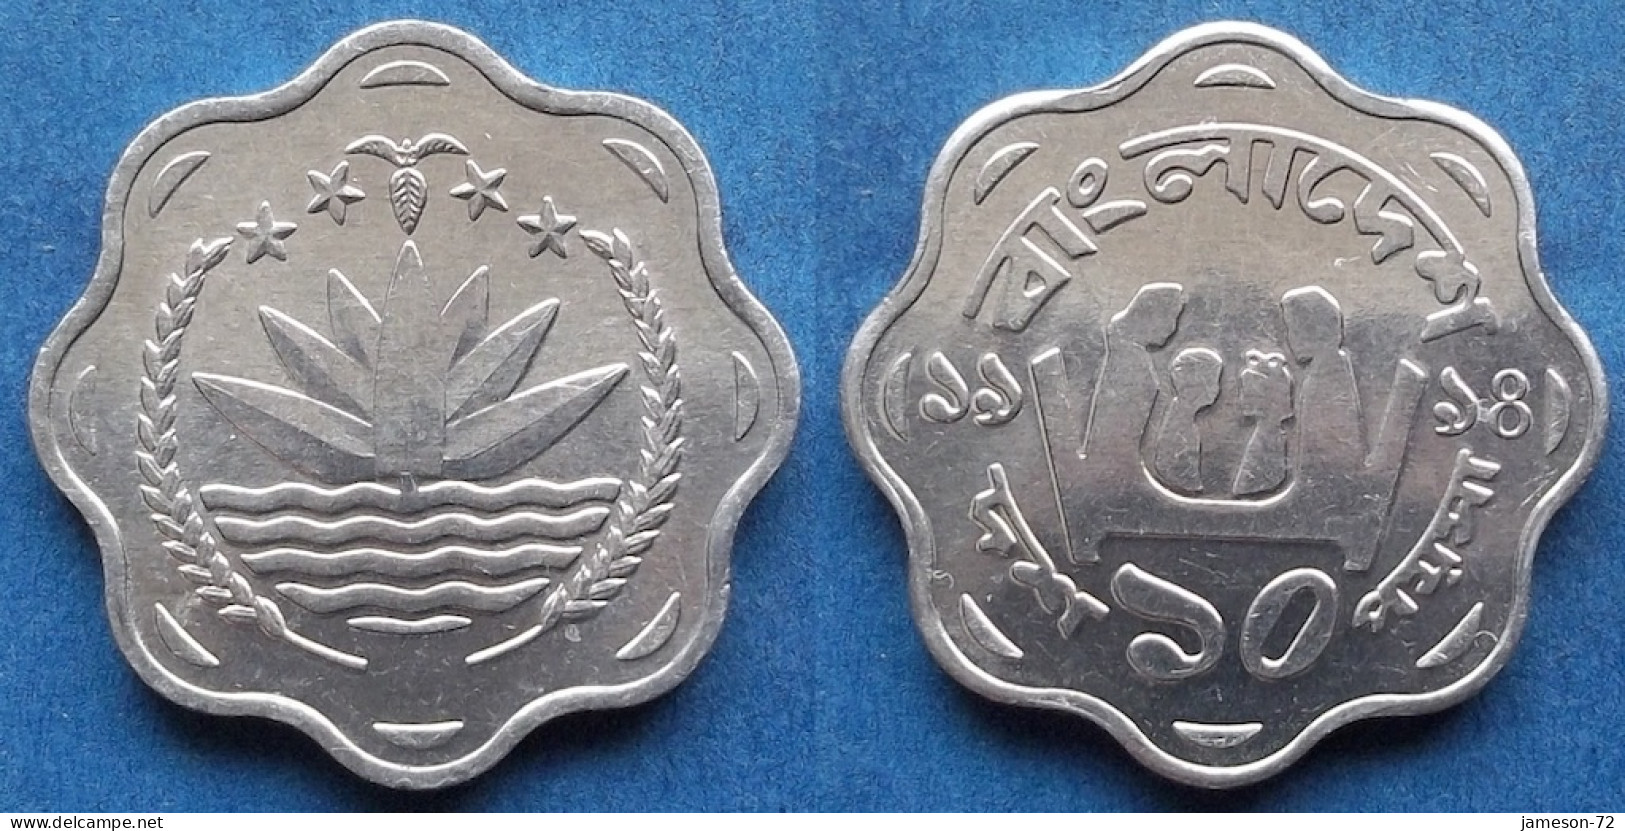 BANGLADESH - 10 Poisha 1994 KM# 11.2 Independent Peoples Republic (1971) - Edelweiss Coins - Bangladesh